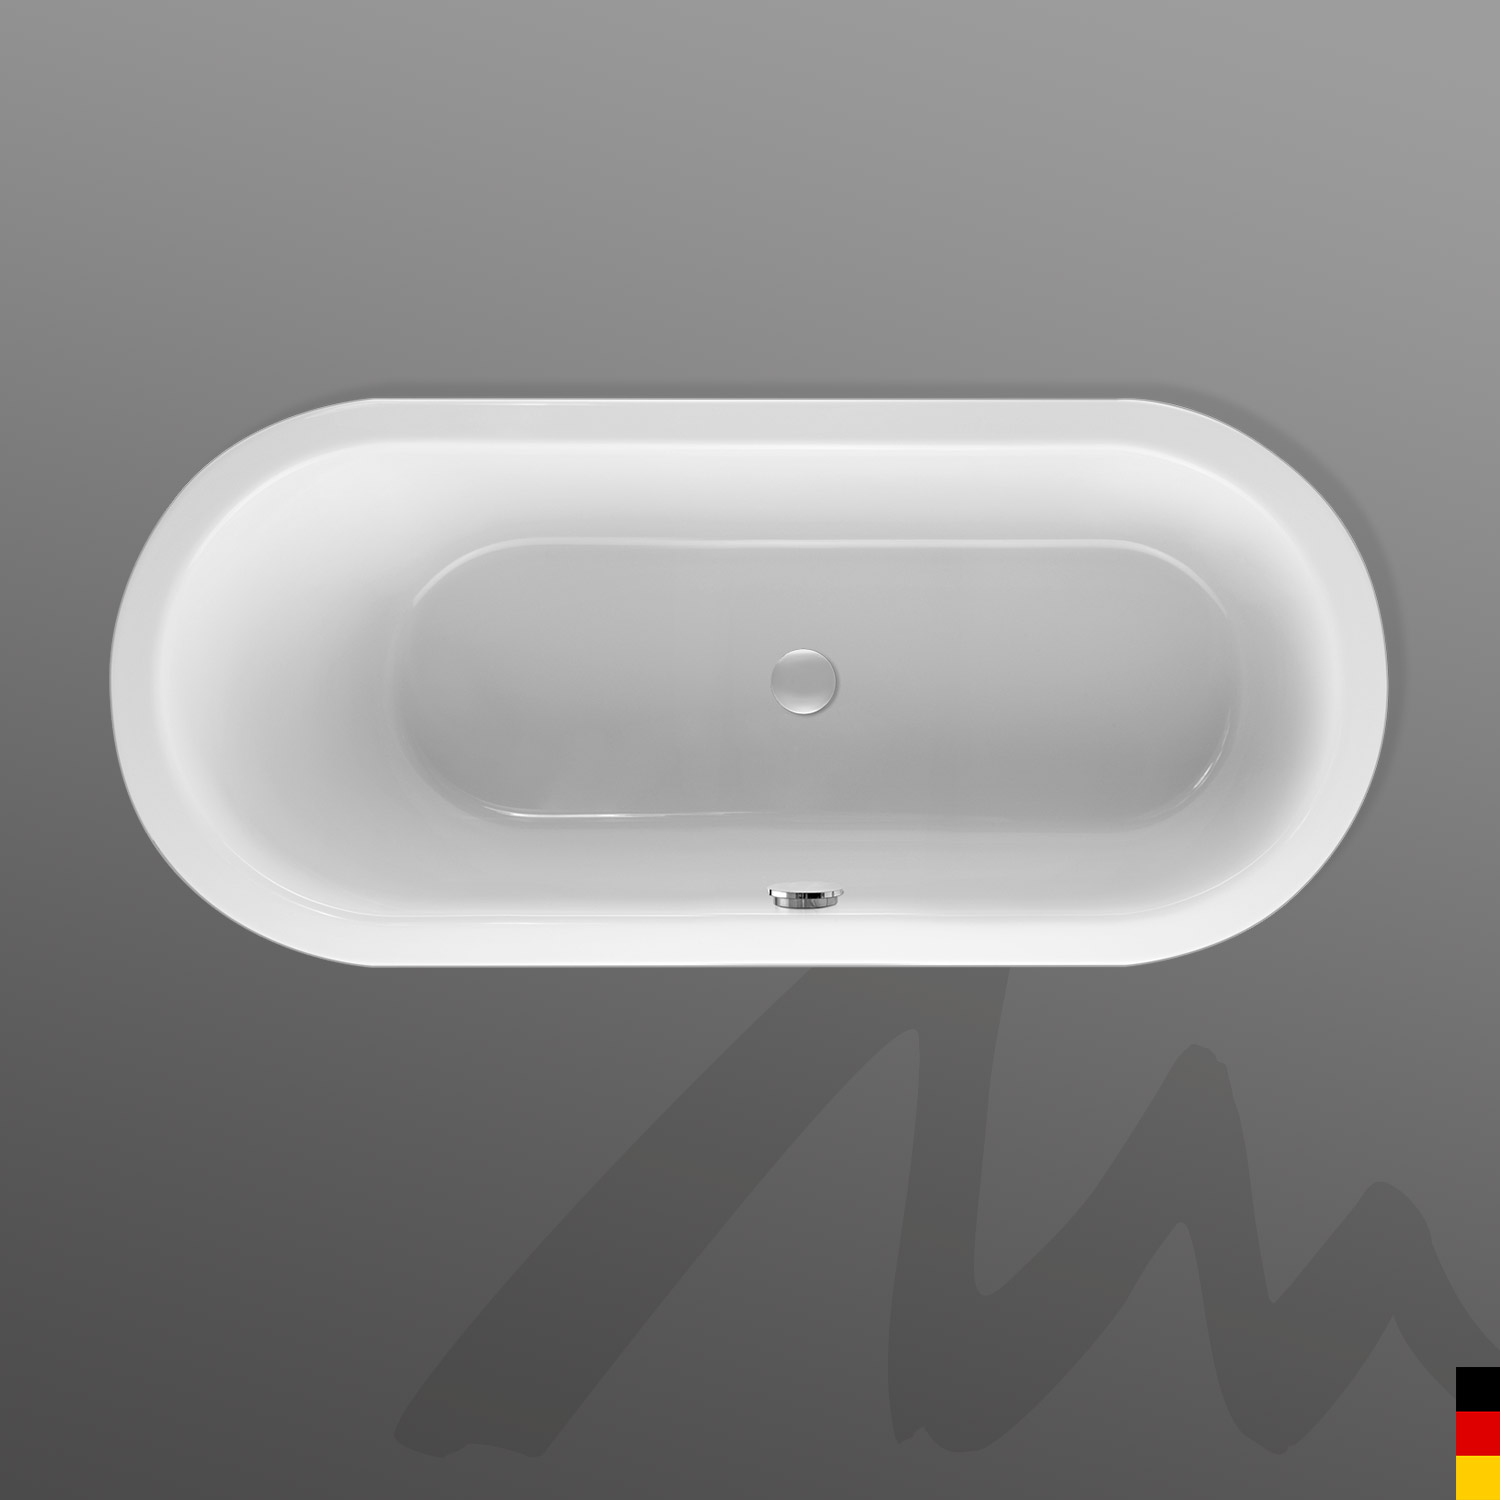 Mauersberger Badewanne Oval Crispa 170/75 uno  170x75x44cm  Farbe:weiß